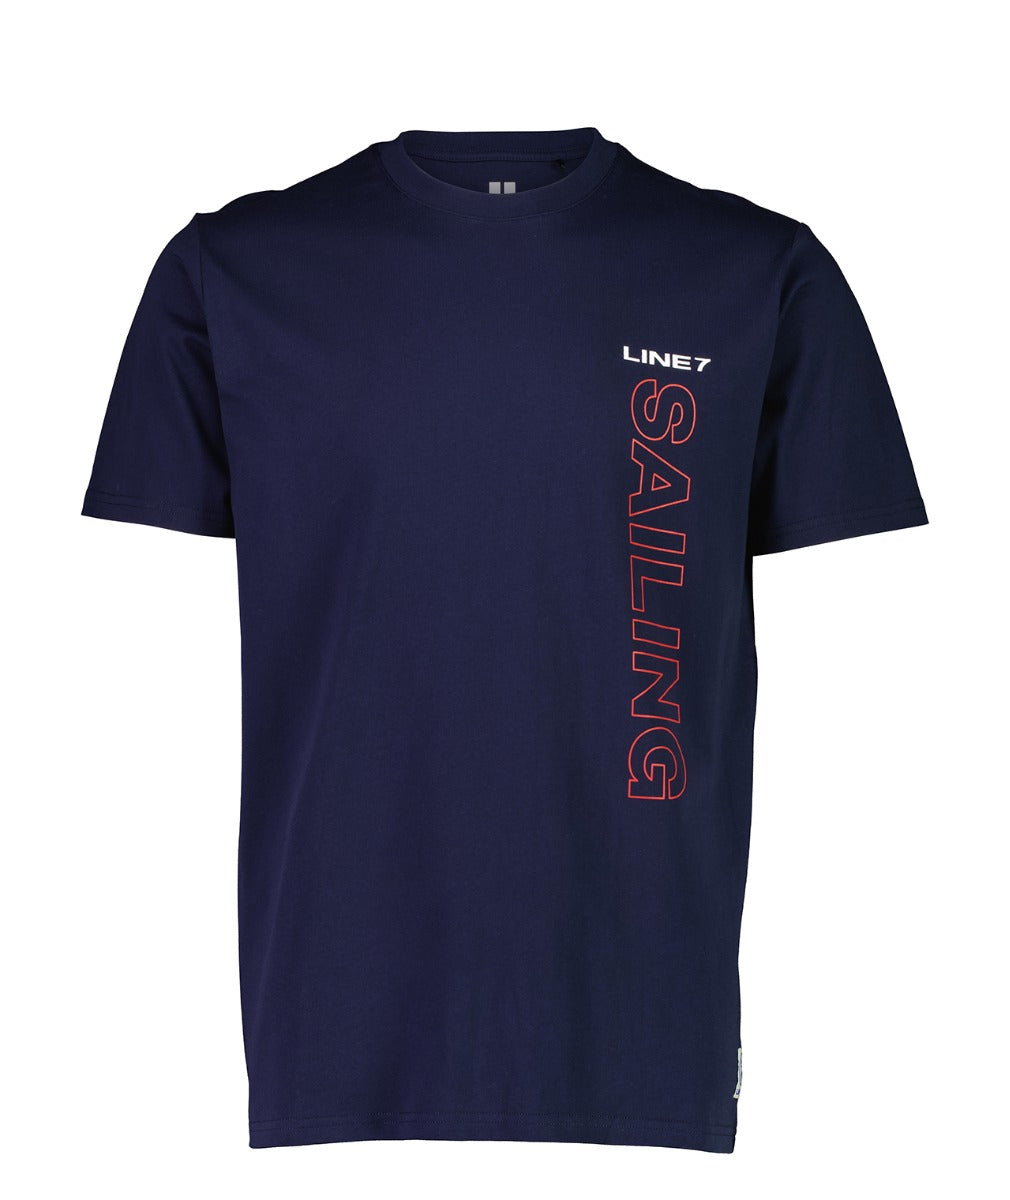 line-7-men-s-sailing-t-shirt.jpg